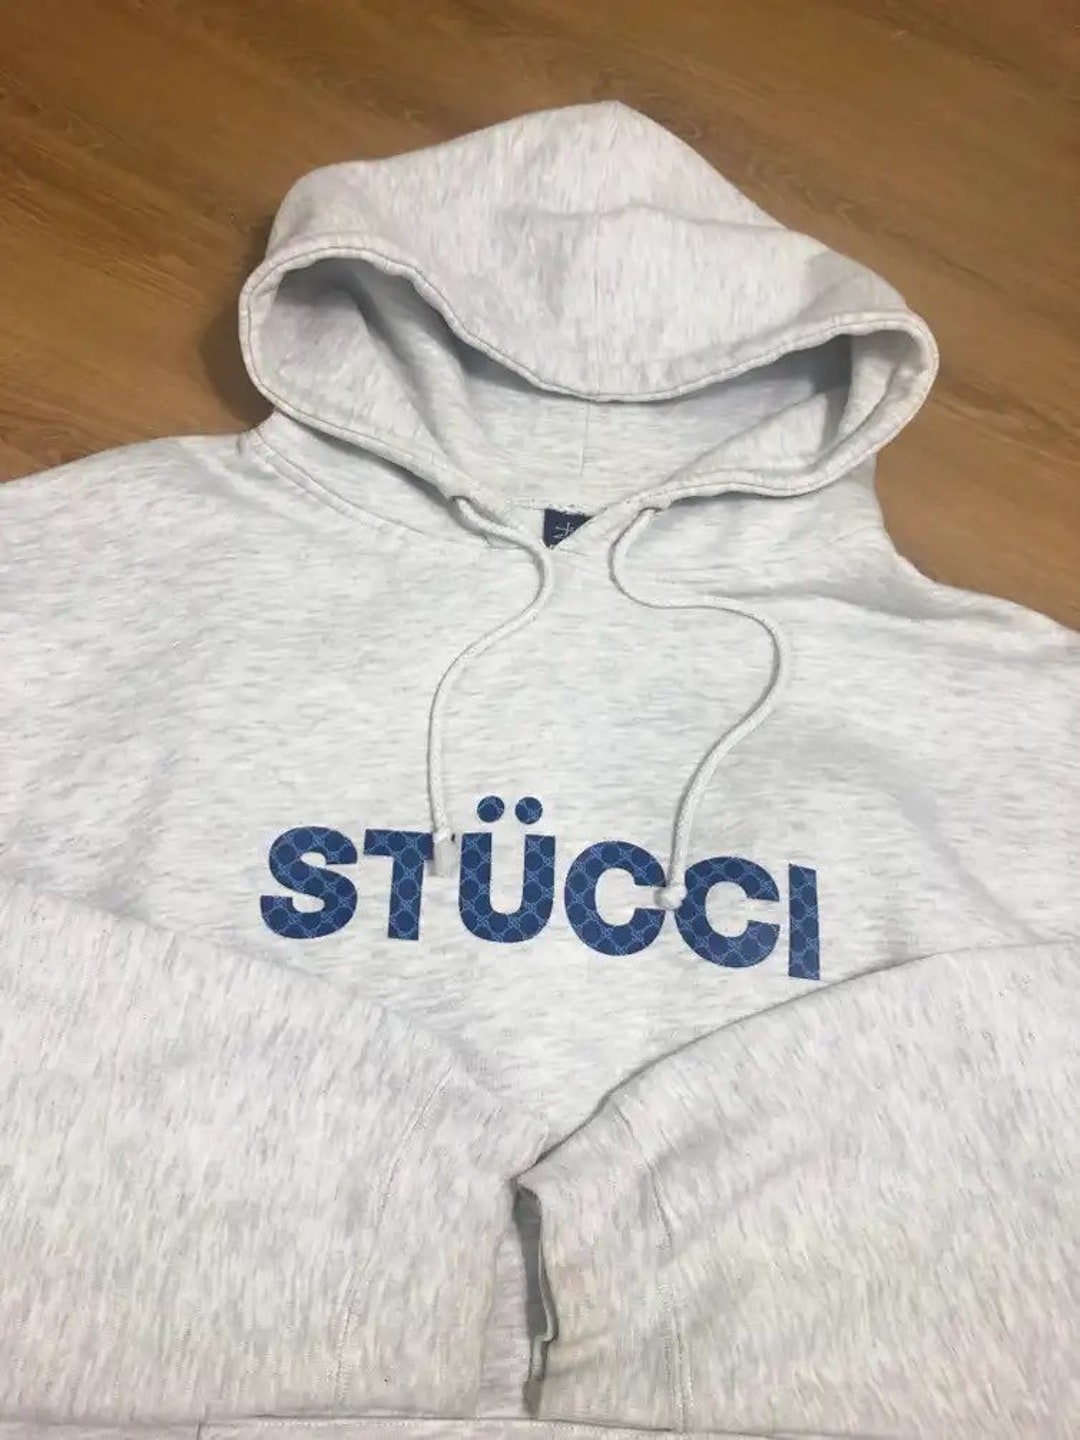 90s Vintage Stussy Monogram gucci Hoodie Sweatshirt size L Gray